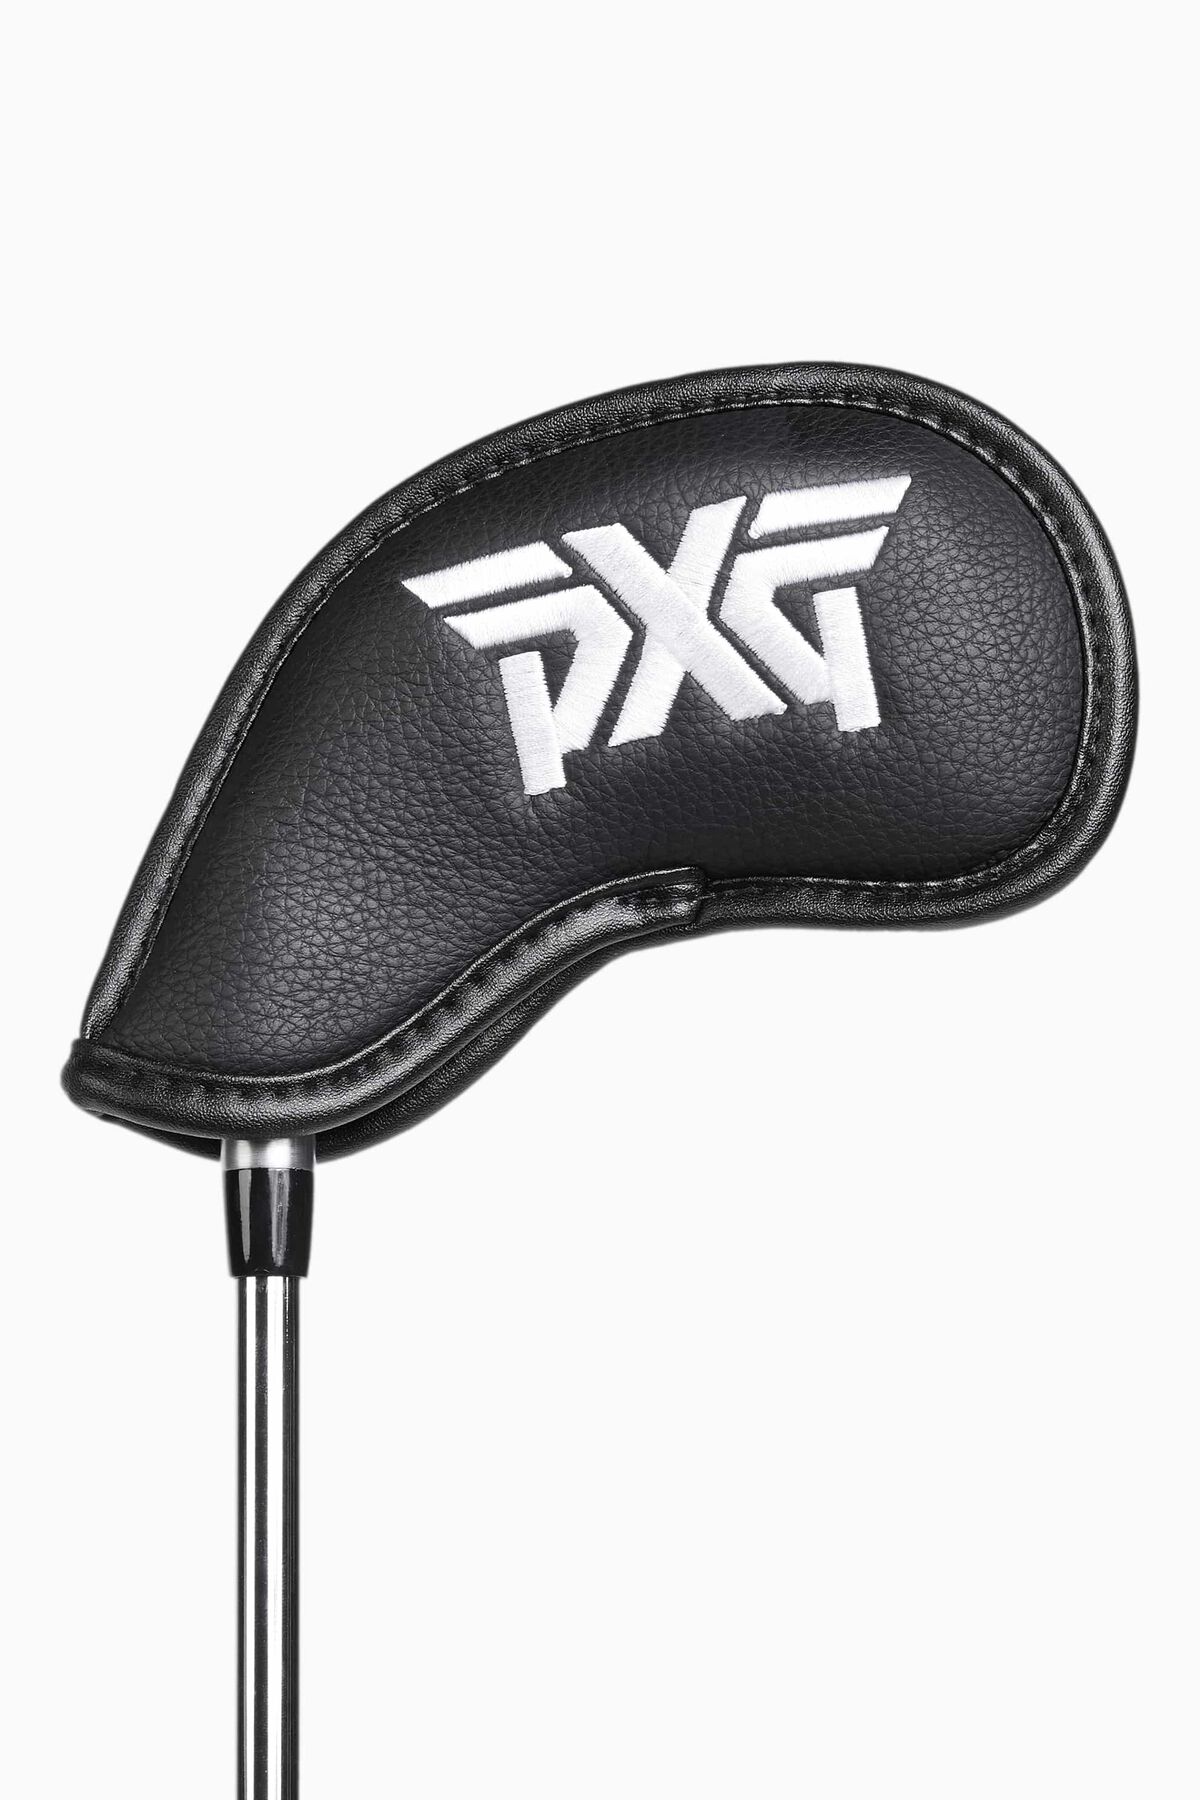 PXG Iron Cover Kit 